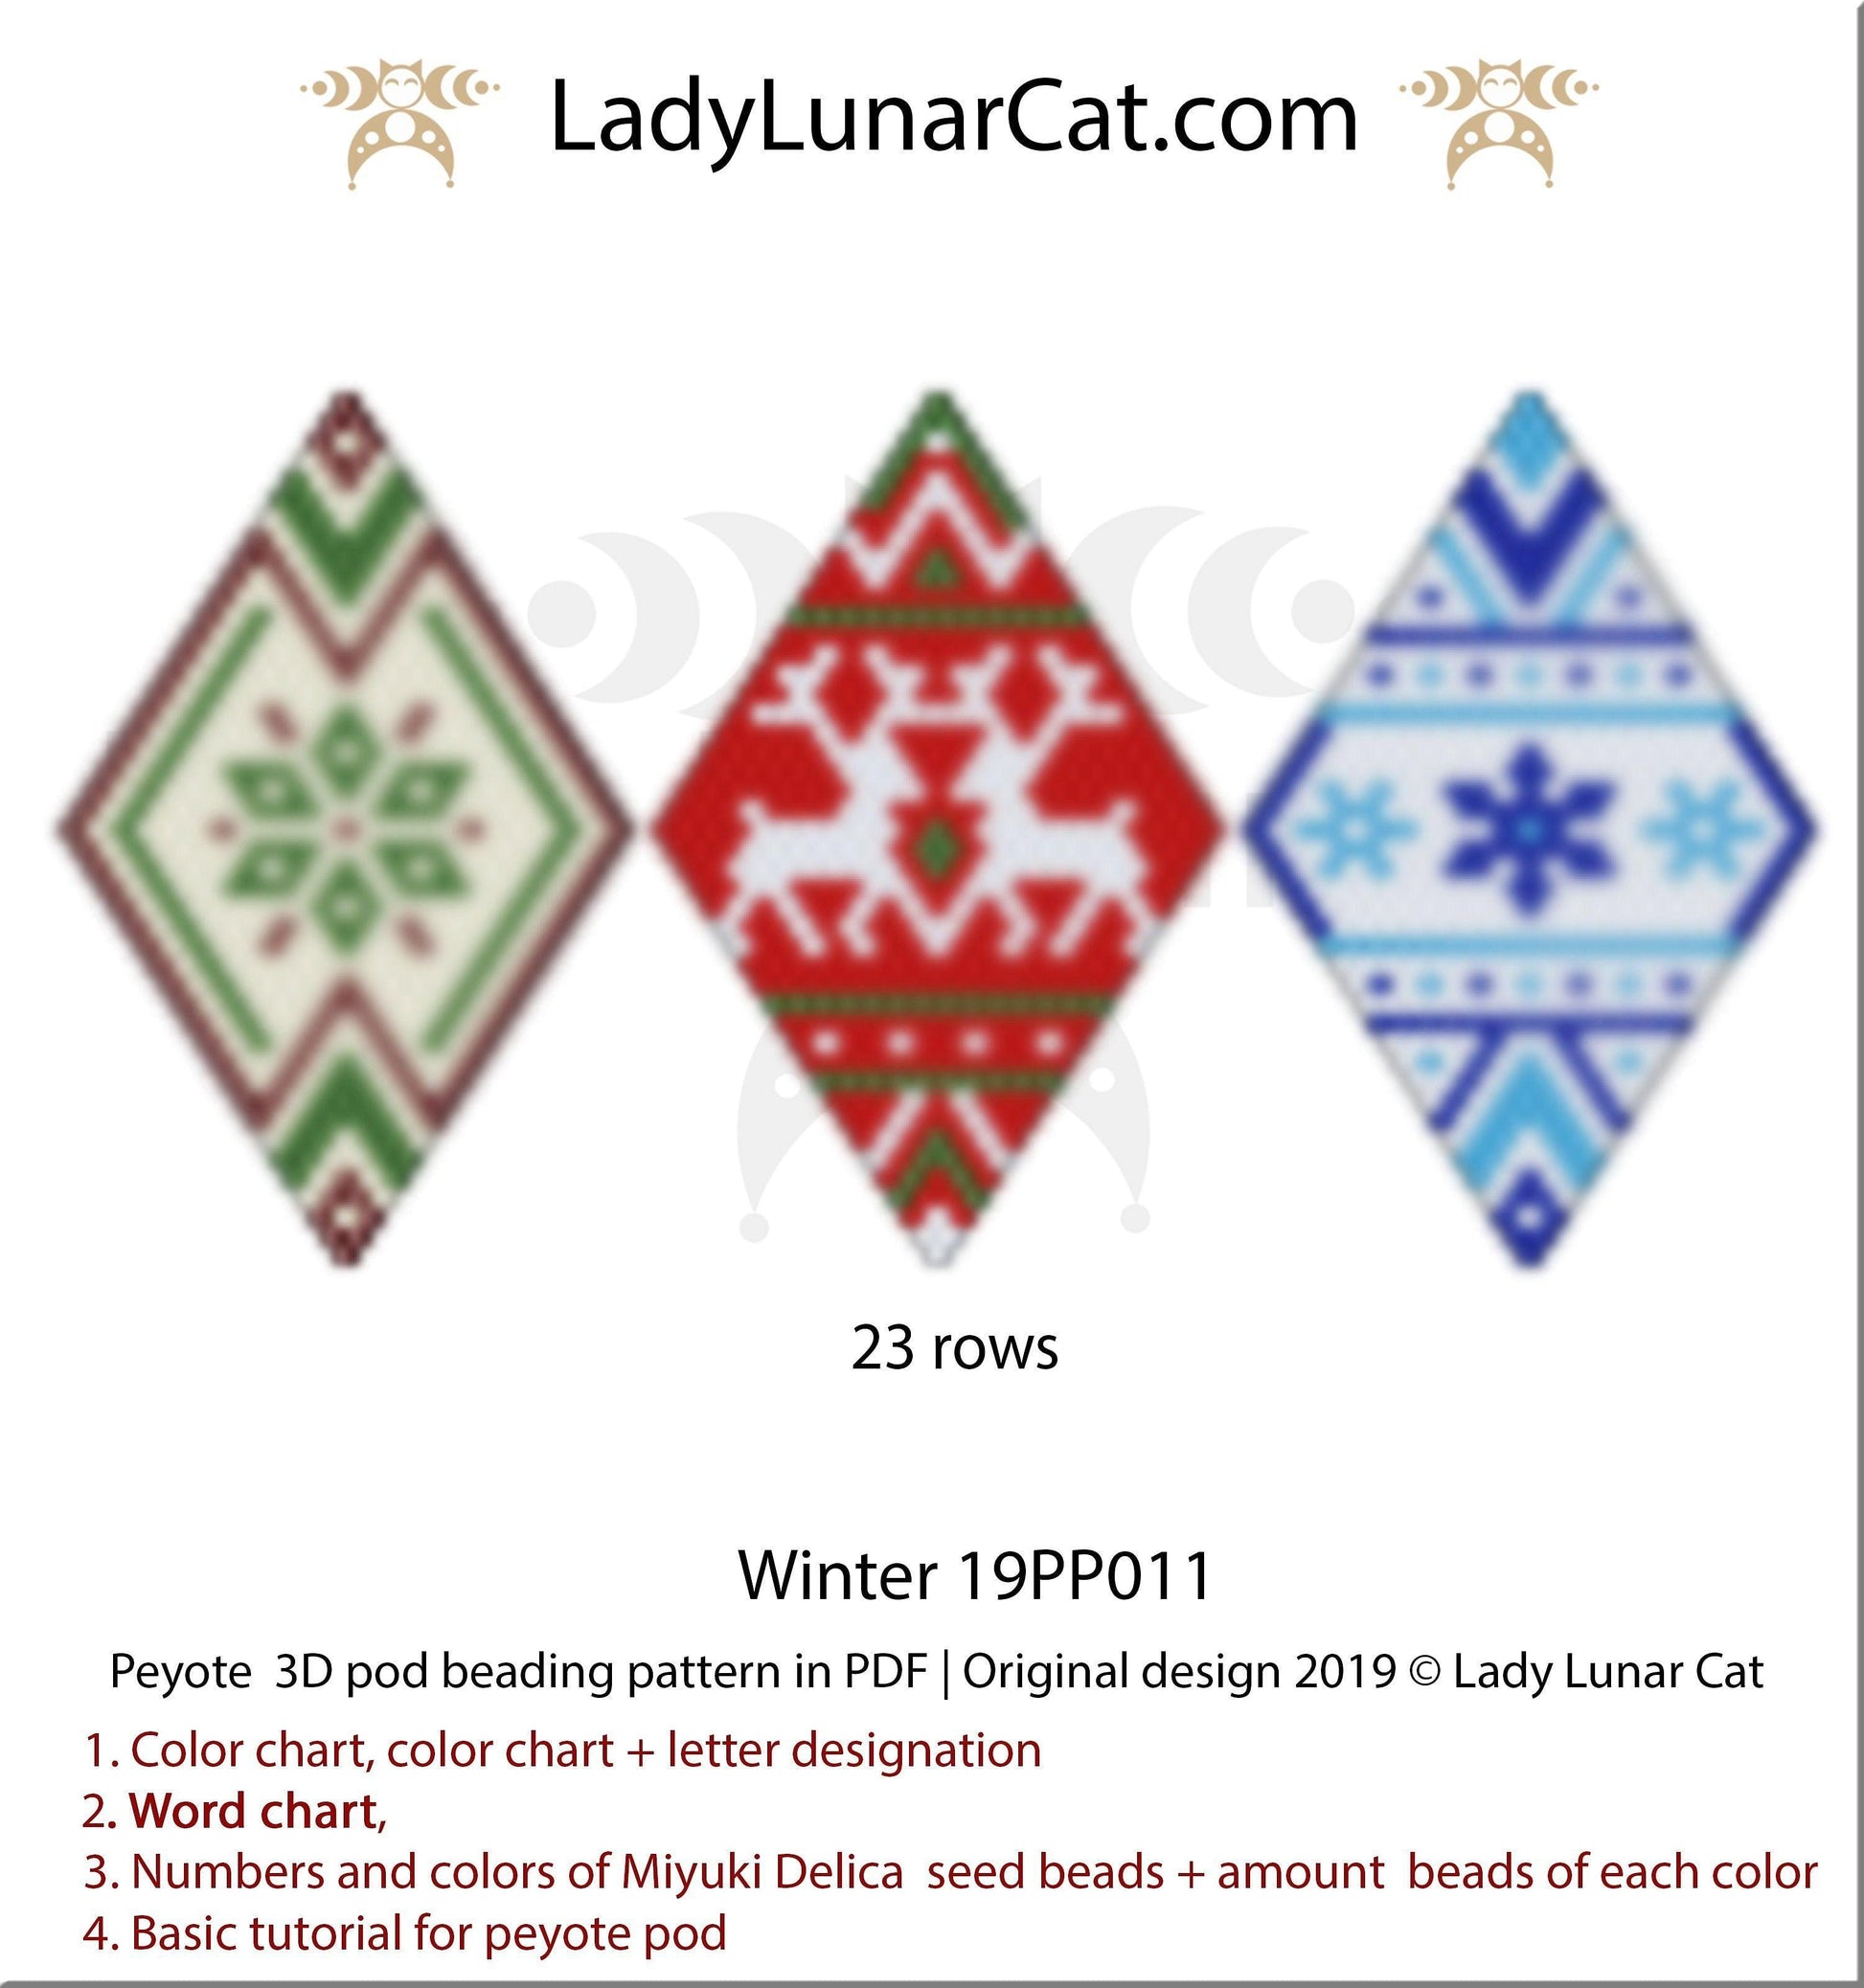 Peyote pod patterns for beading Winter 19PP011 LadyLunarCat